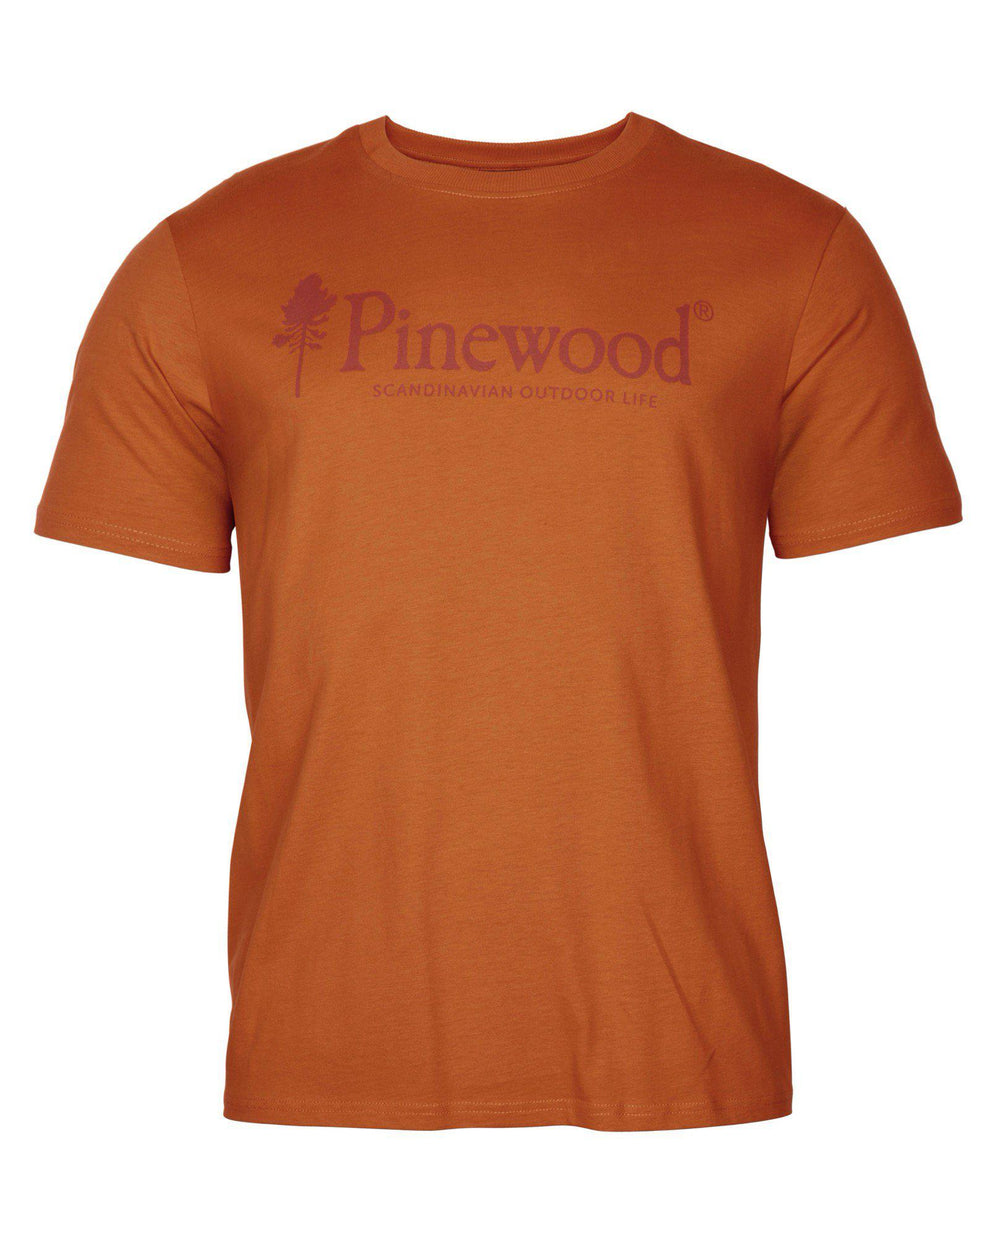 5445-501-01_Pinewood-Outdoor-Life-T-Shirt-Mens_Burned-Orange